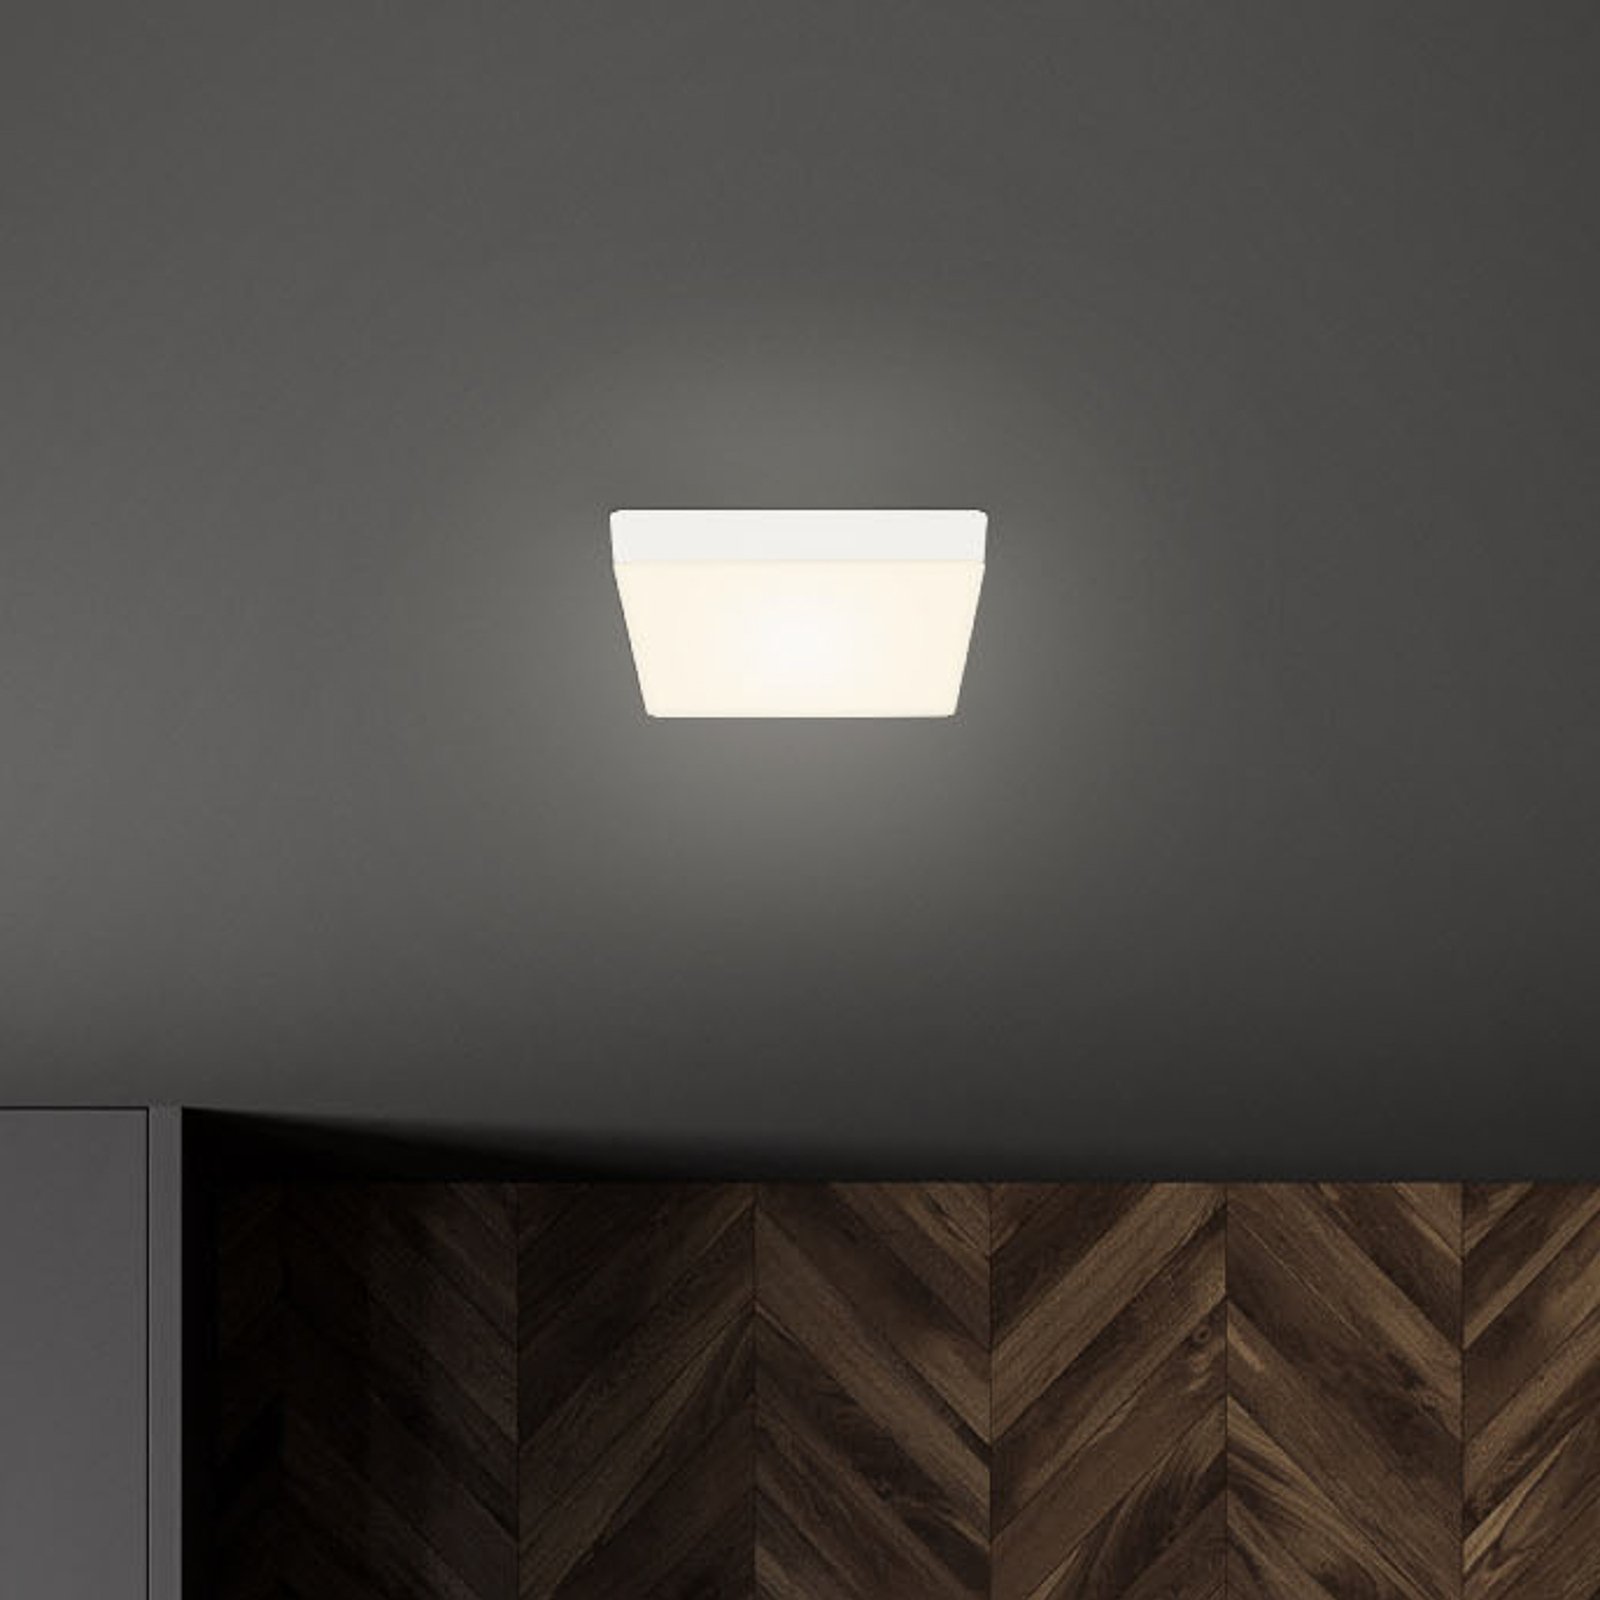 Flame LED plafondlamp, 15,7 x 15,7 cm, wit